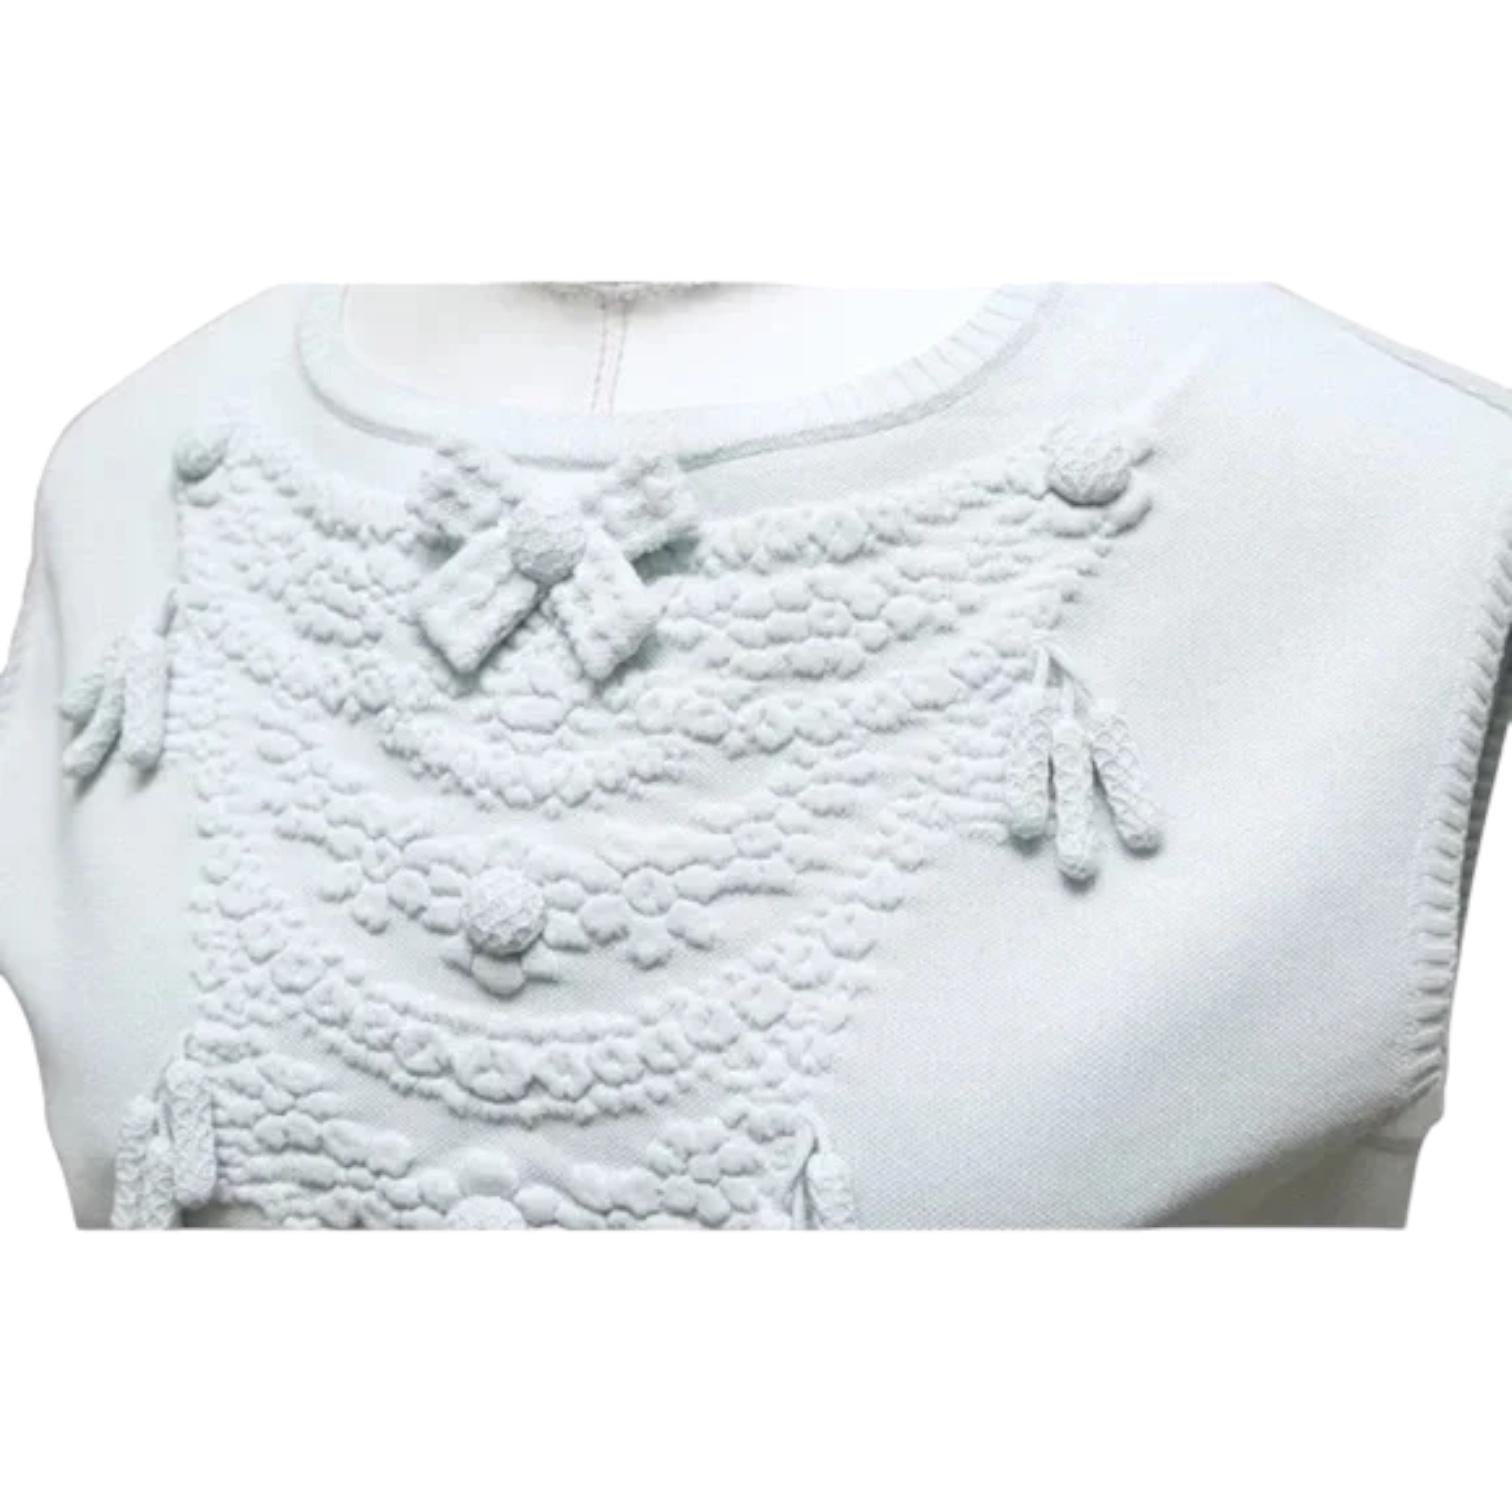 CHANEL Sweater Knit Top Blue Sleeveless Bateau Neck Bow Tassel Sz 40 13C 2013 1